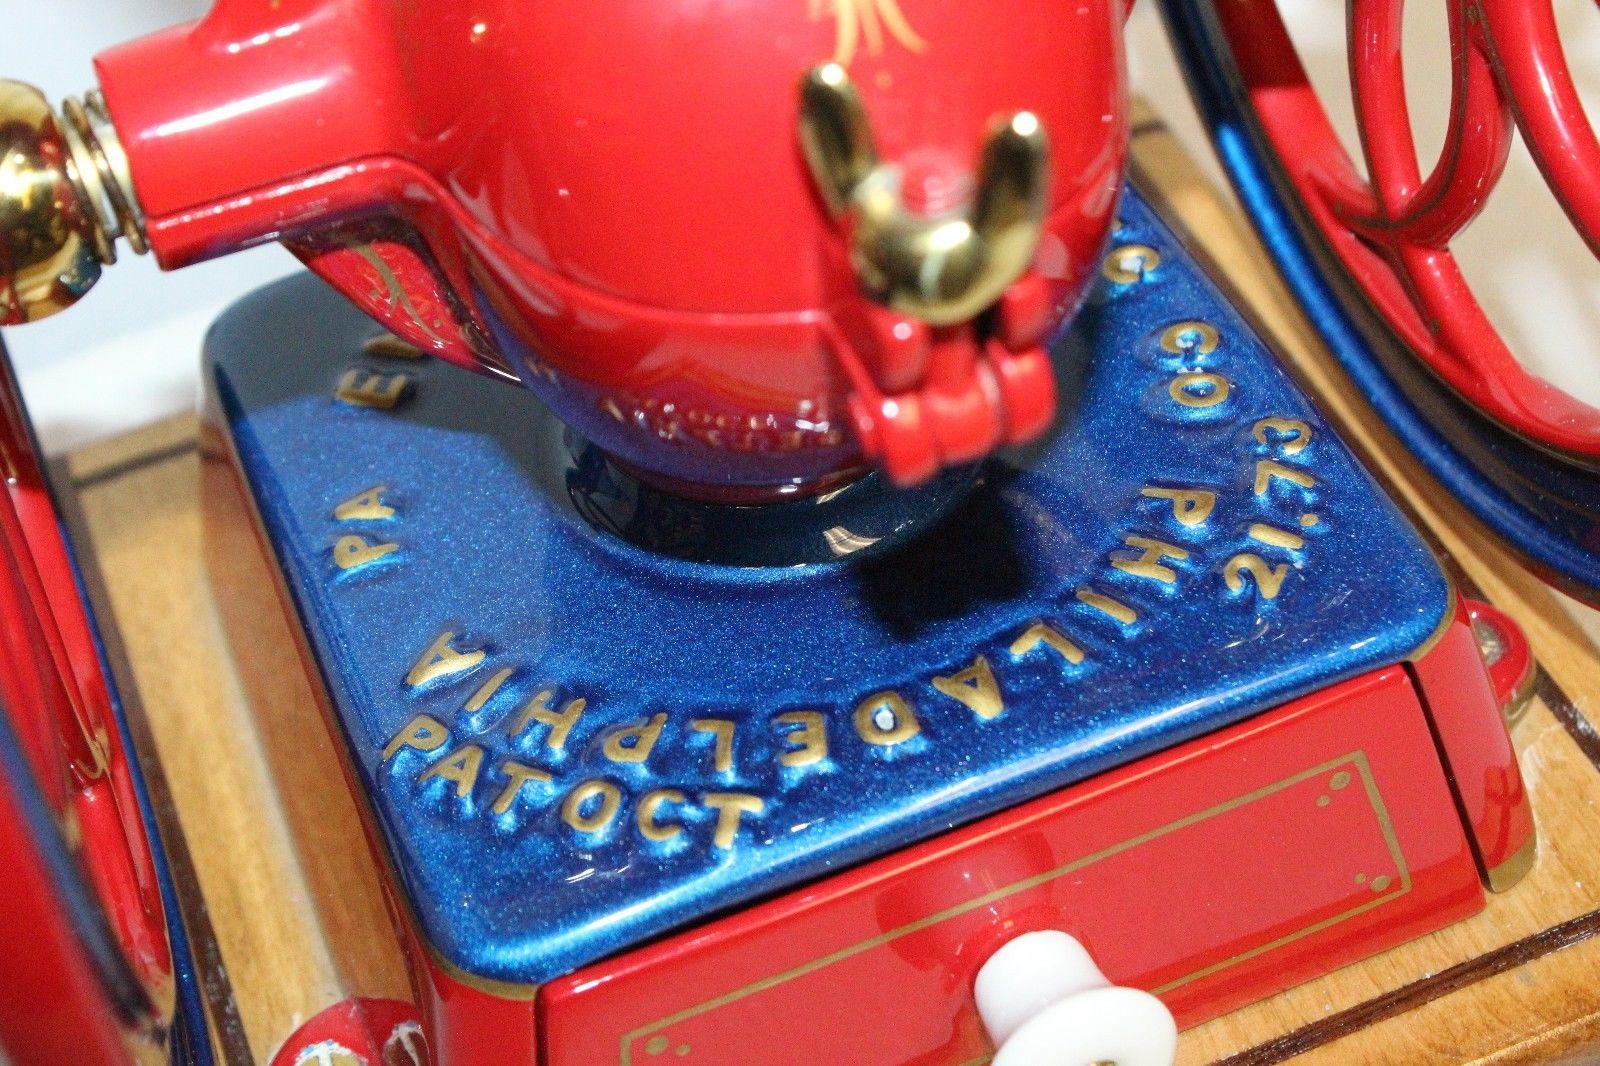 enterprise coffee grinder history